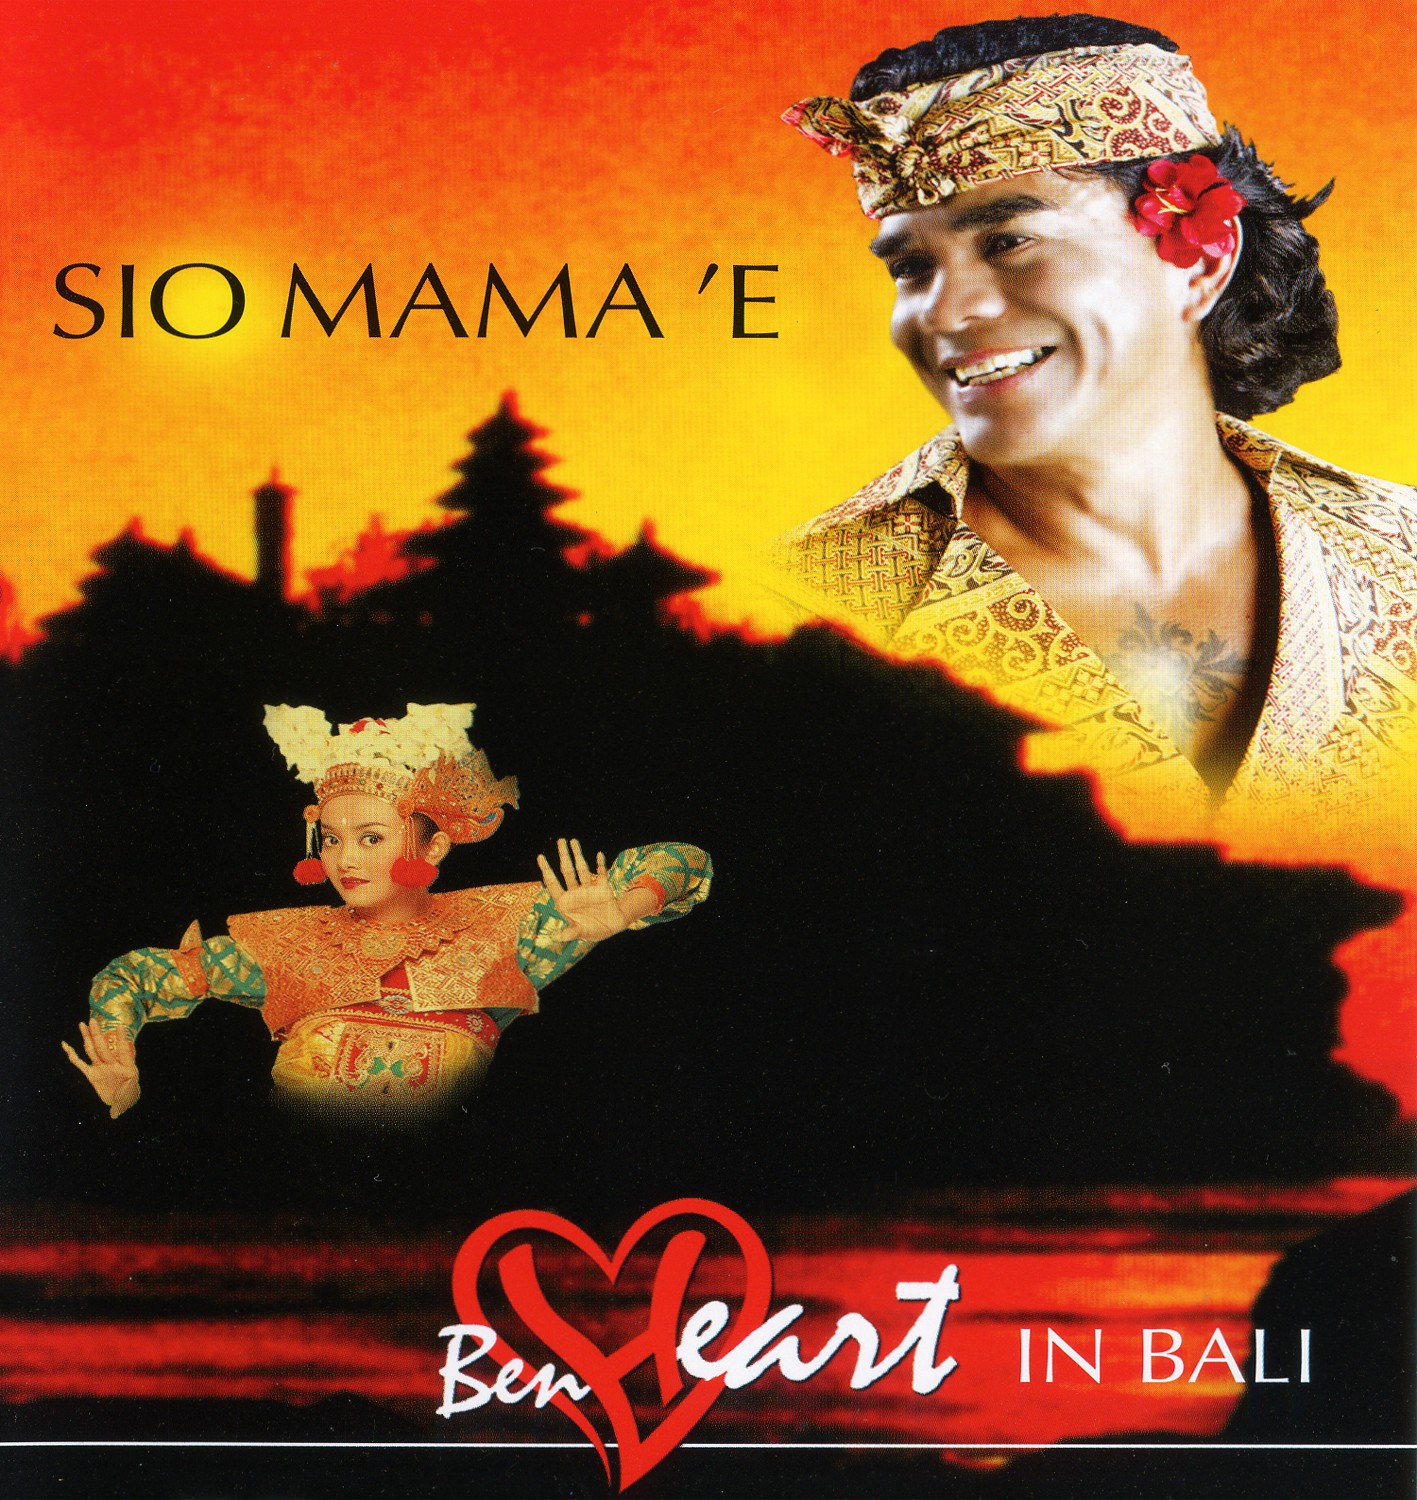 Ben Heart in Bali CD & DVD